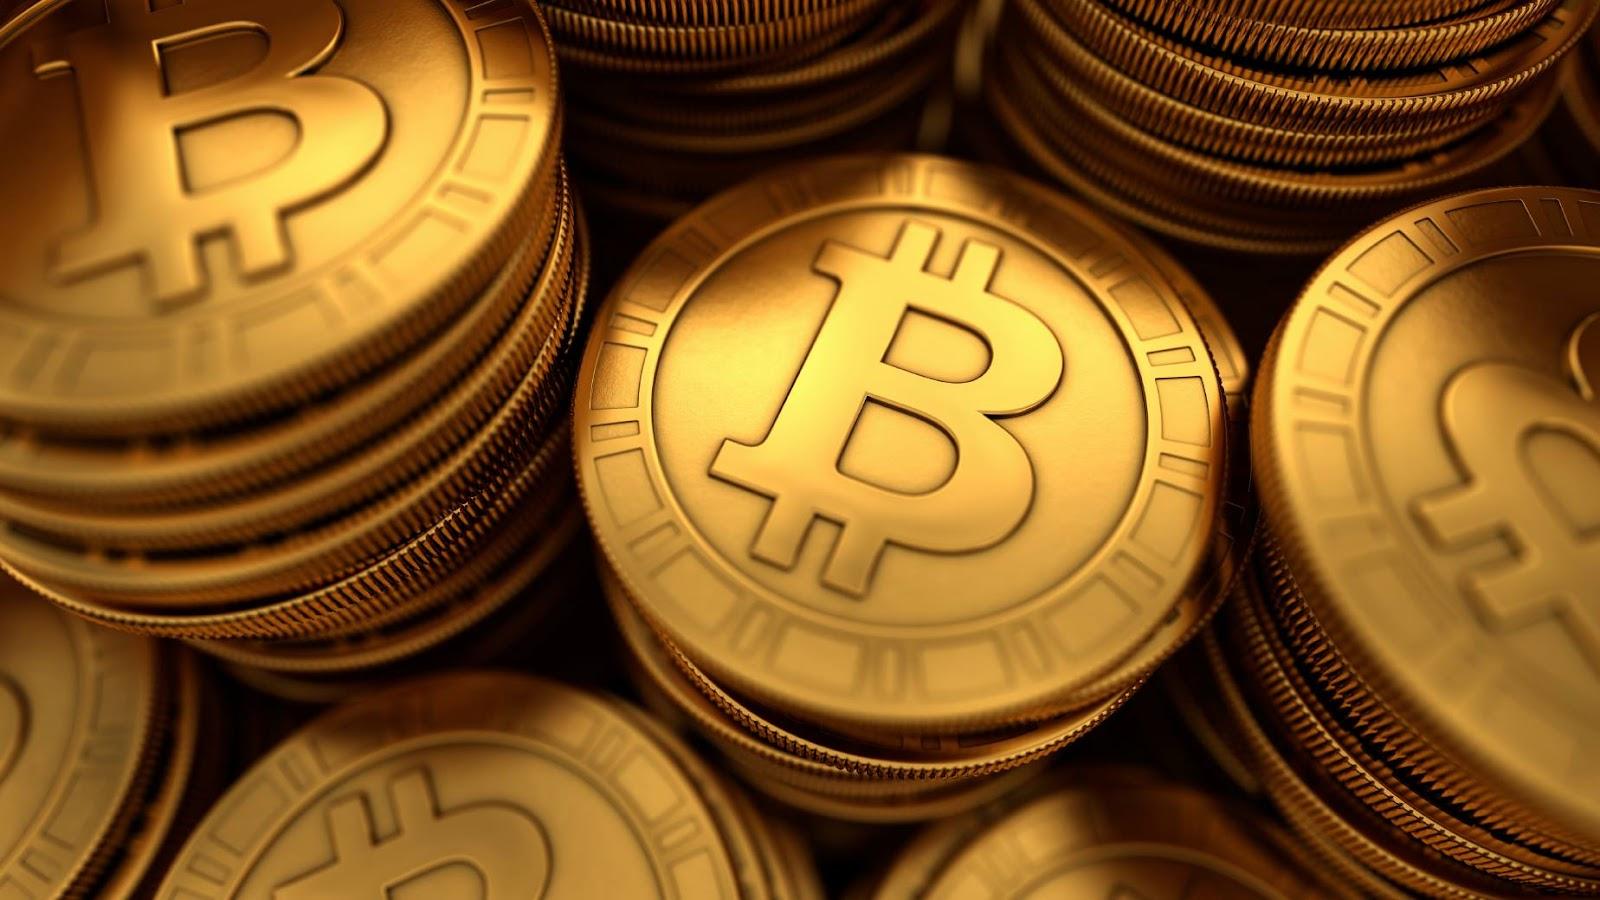 777 bitcoin btc miner fees minimize